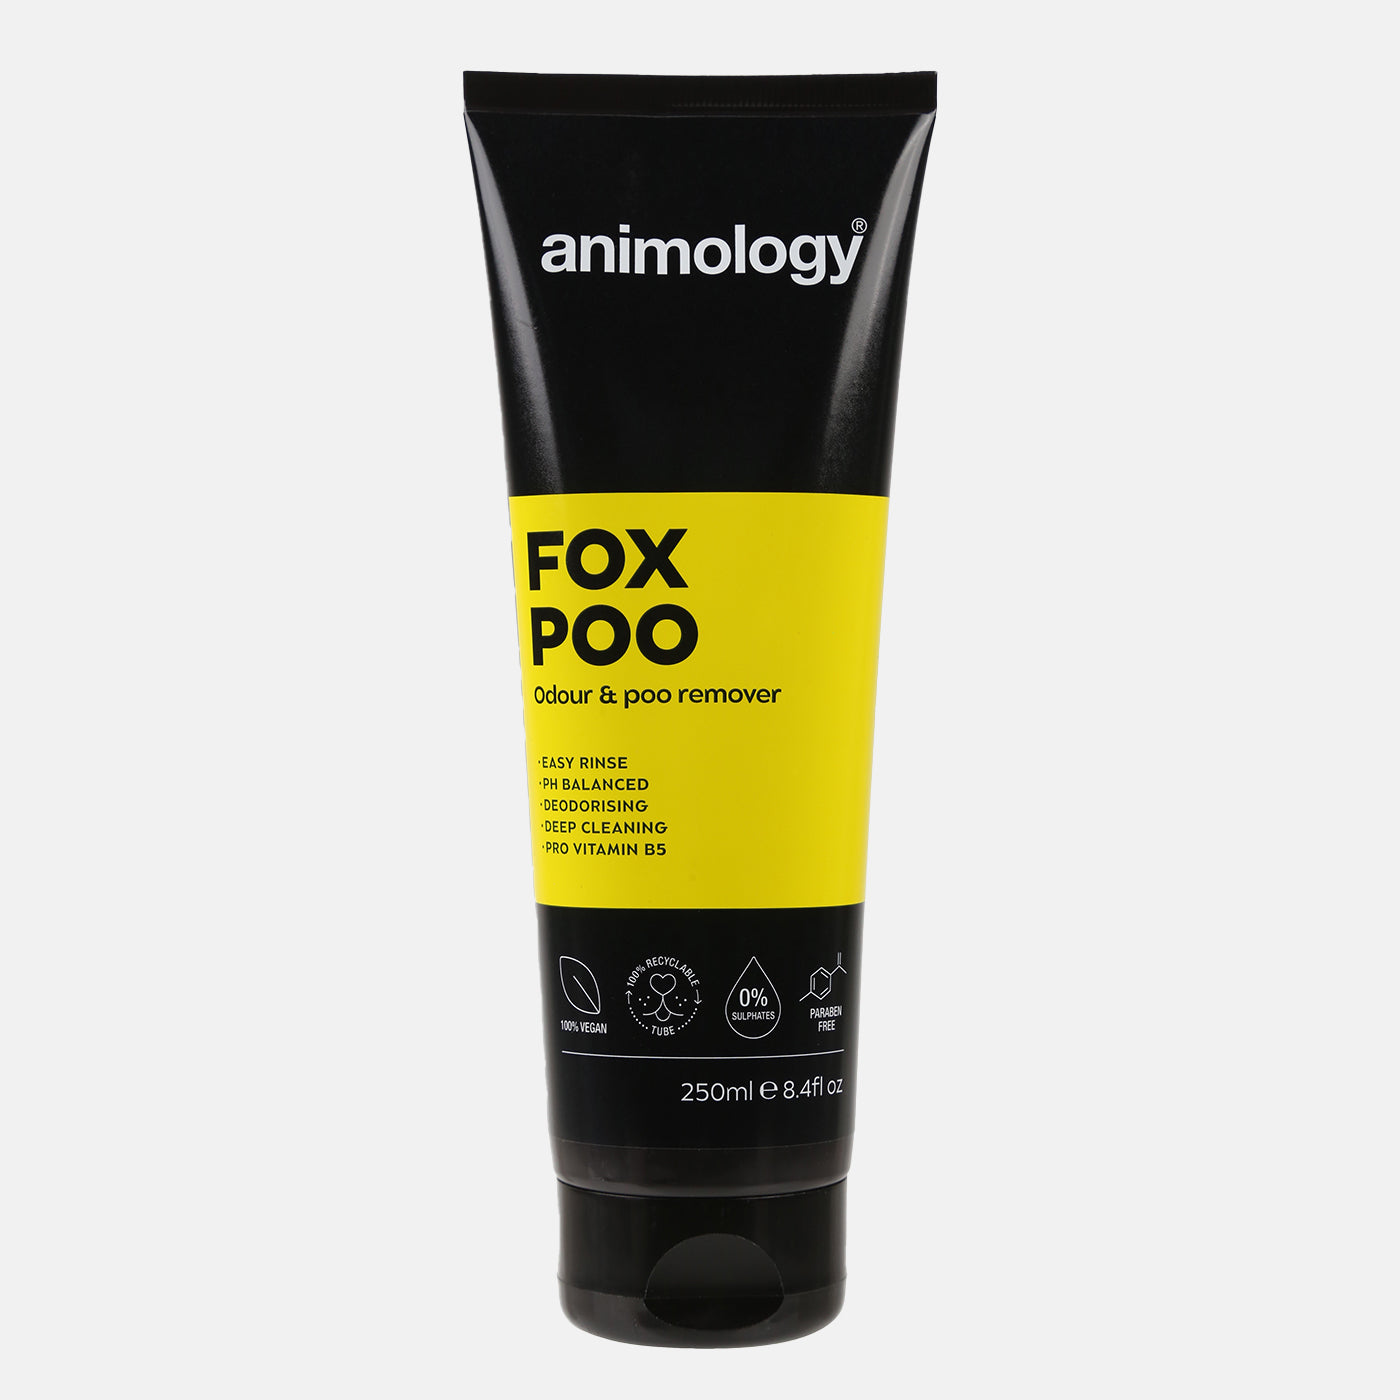 Animology Fox Poo Dog Shampoo